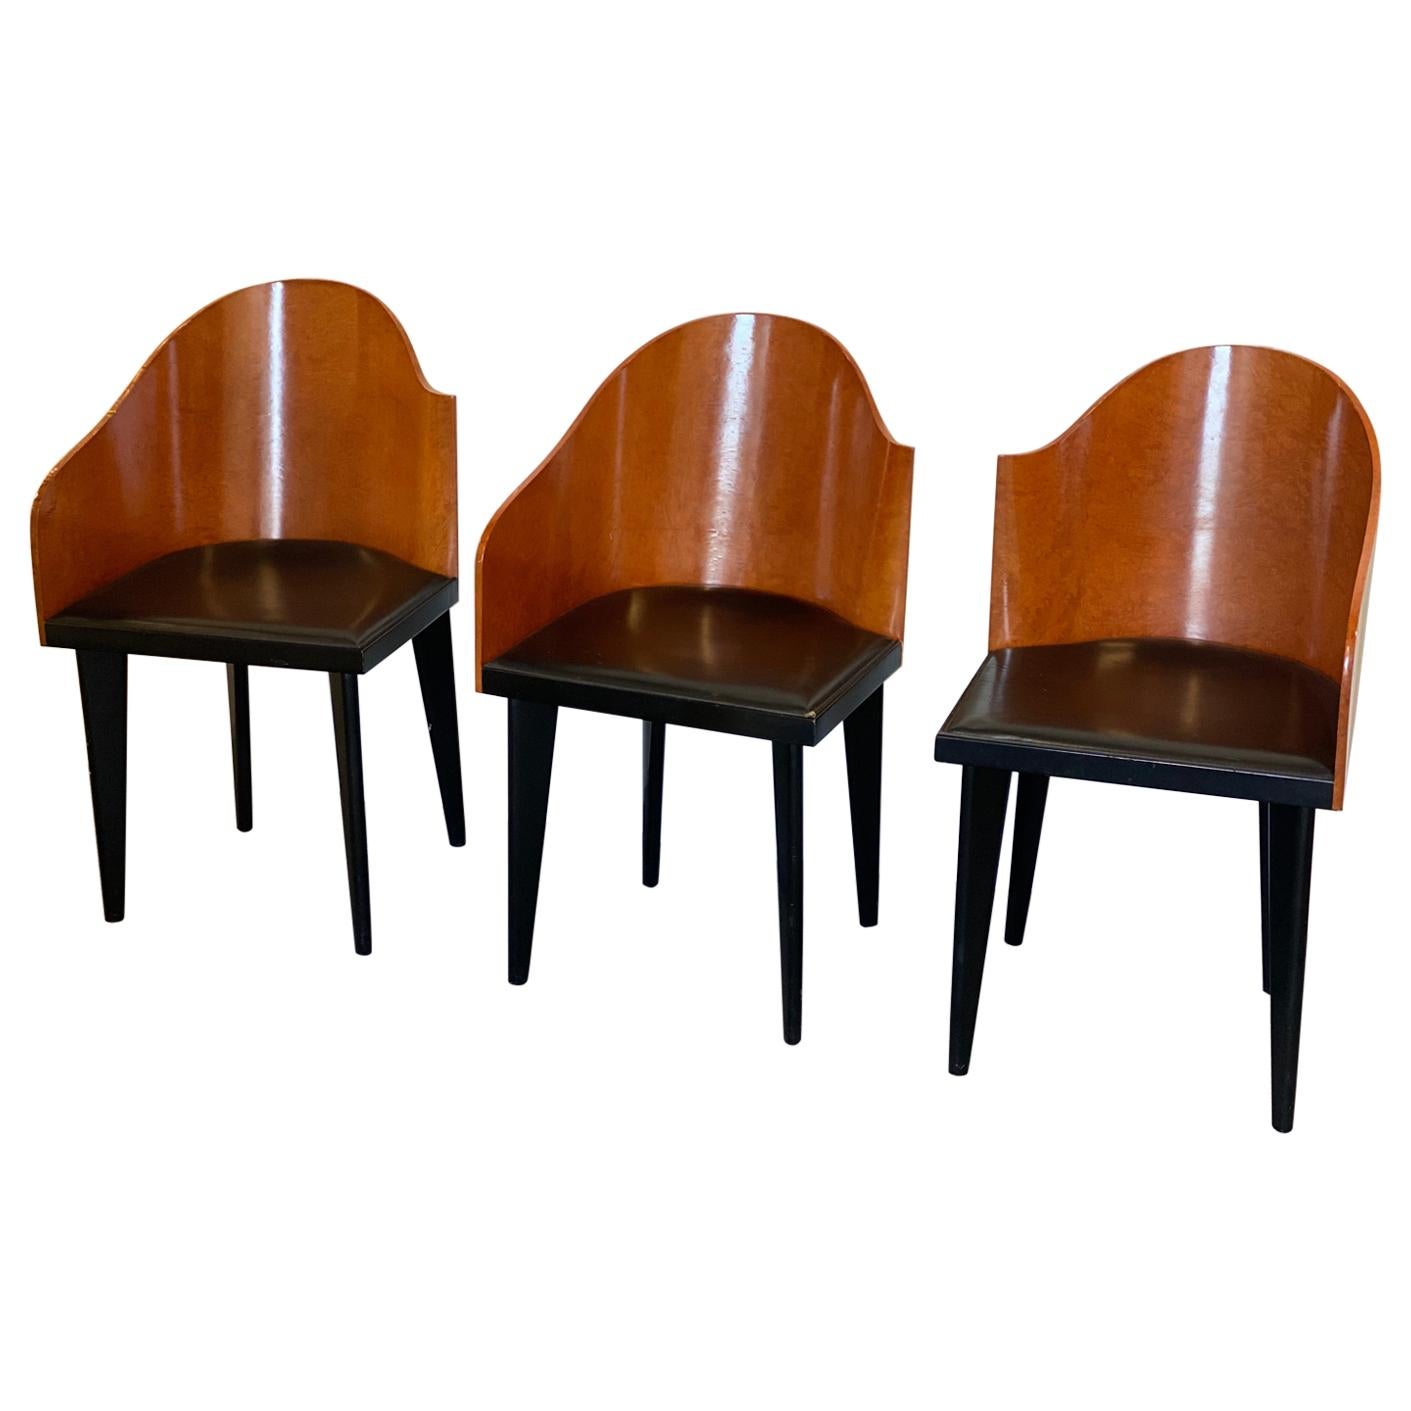 Set of Three Toscana Chairs Designed by Piero Sartogo for Saporiti